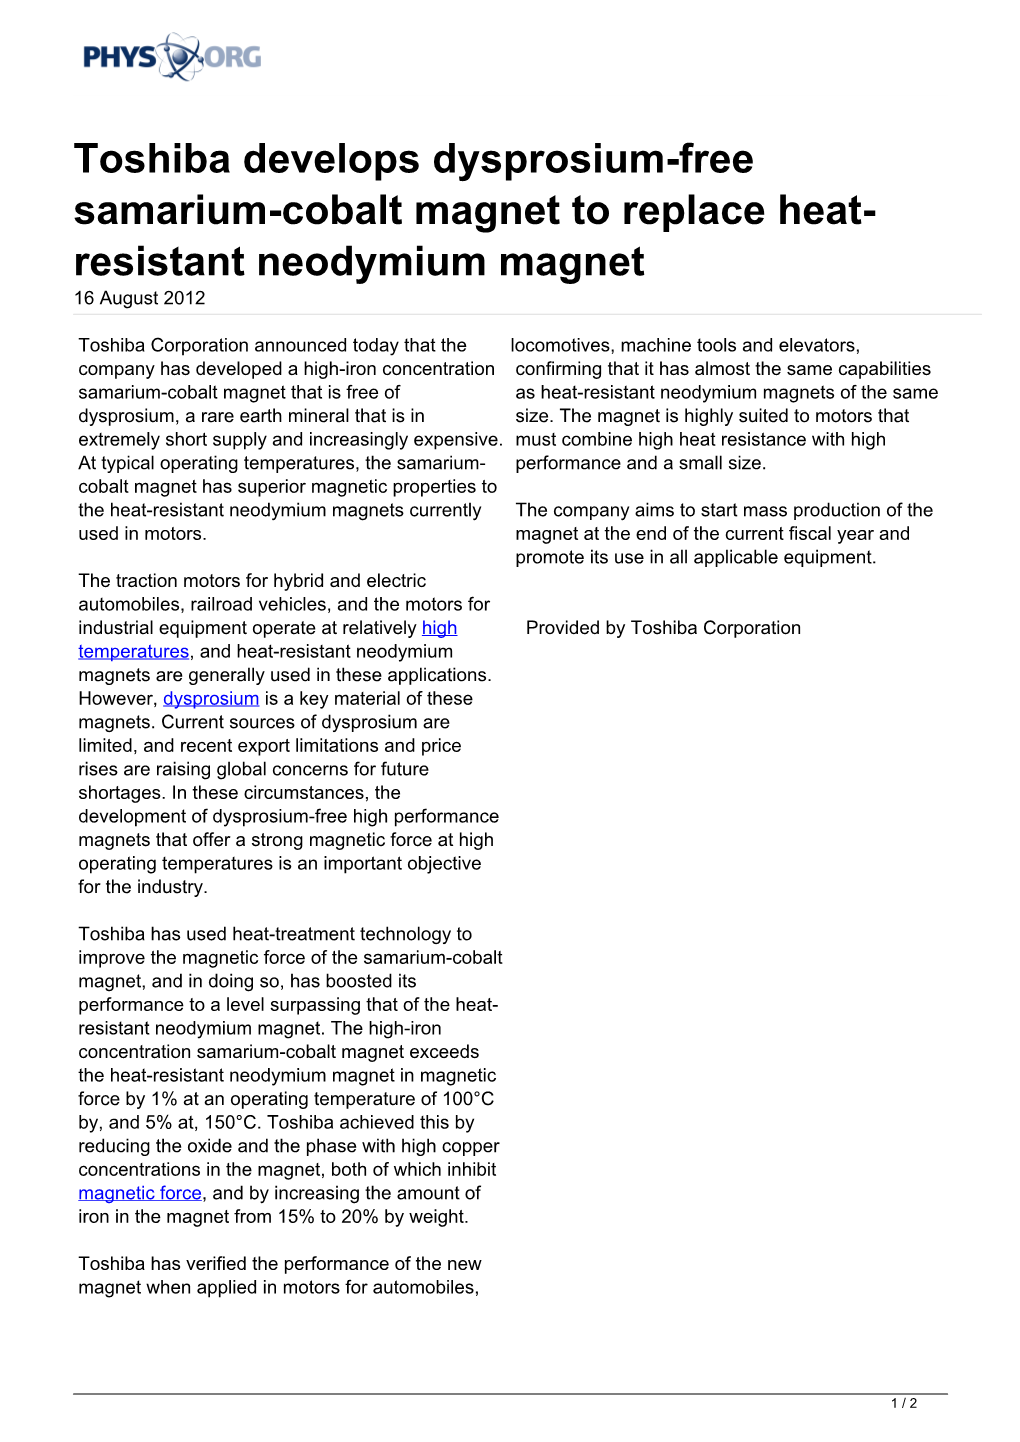 Toshiba Develops Dysprosium-Free Samarium-Cobalt Magnet to Replace Heat- Resistant Neodymium Magnet 16 August 2012